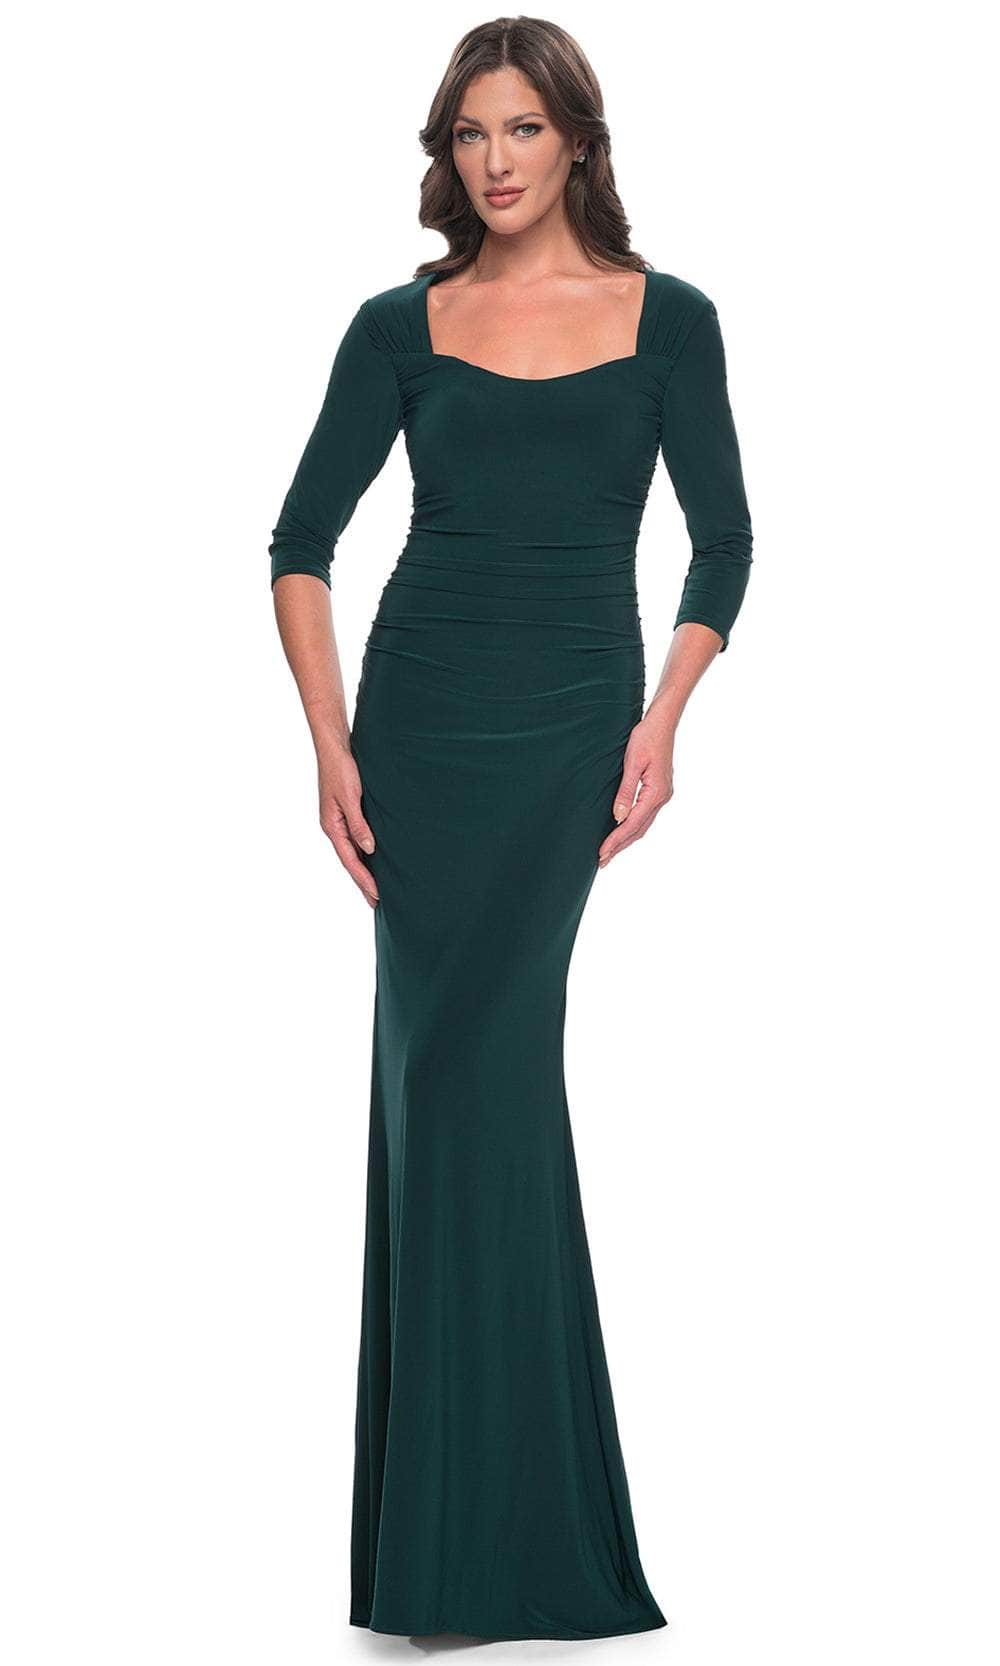 Image of La Femme 30883 - Quarter Sleeve Jersey Evening Dress